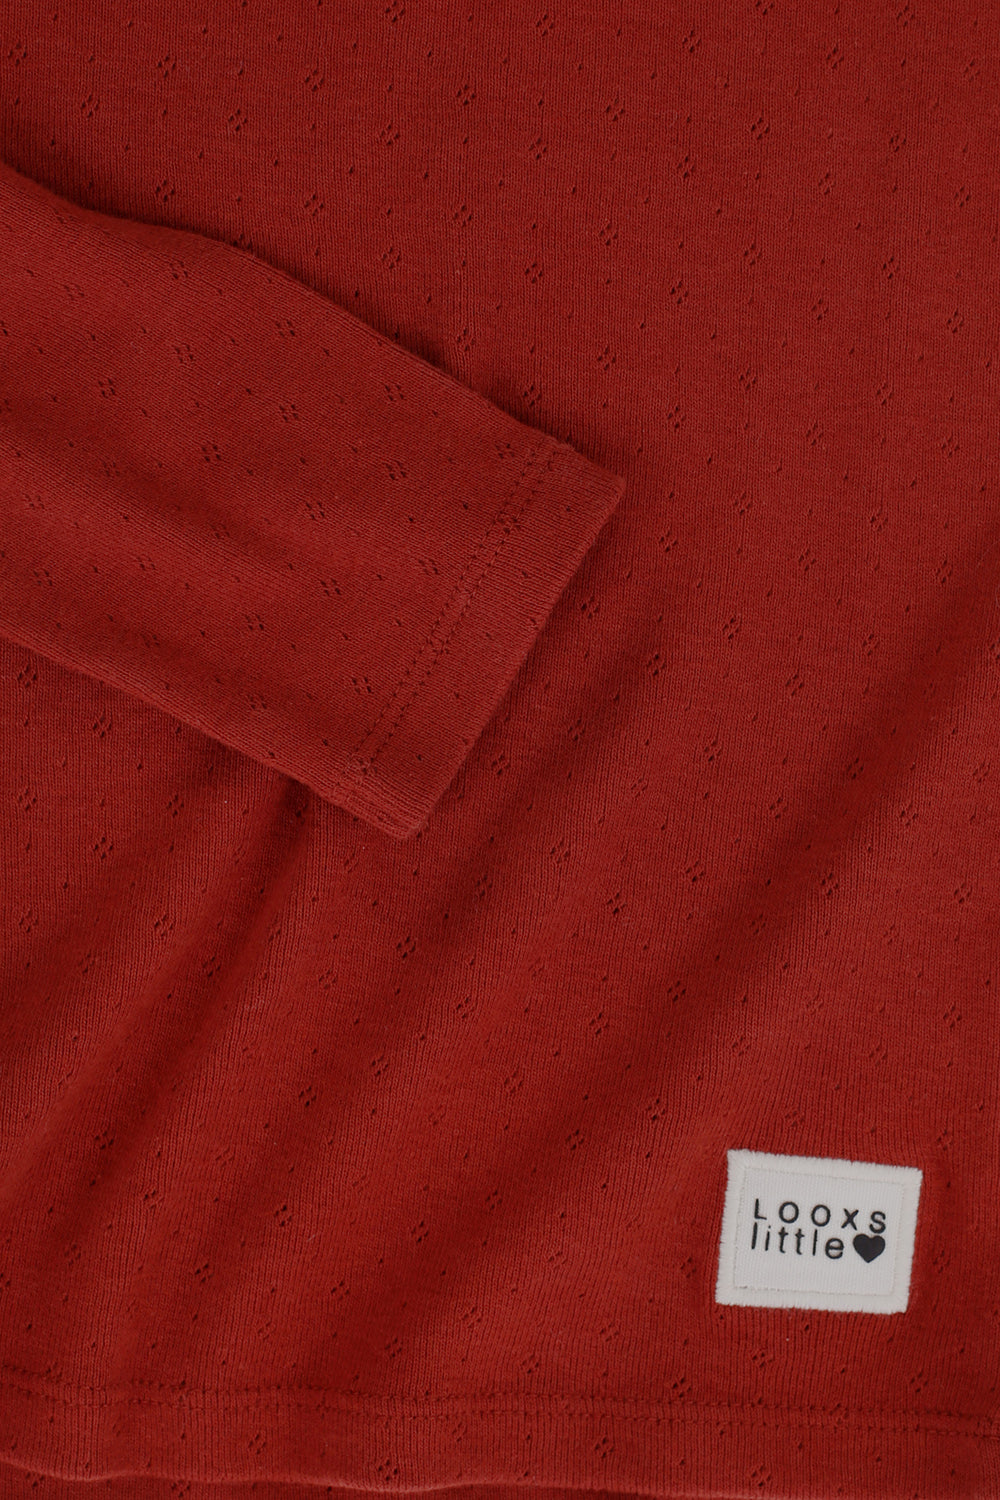 Meisjes Pointel T-Shirt L/S van LOOXS Little in de kleur TERRA in maat 128.